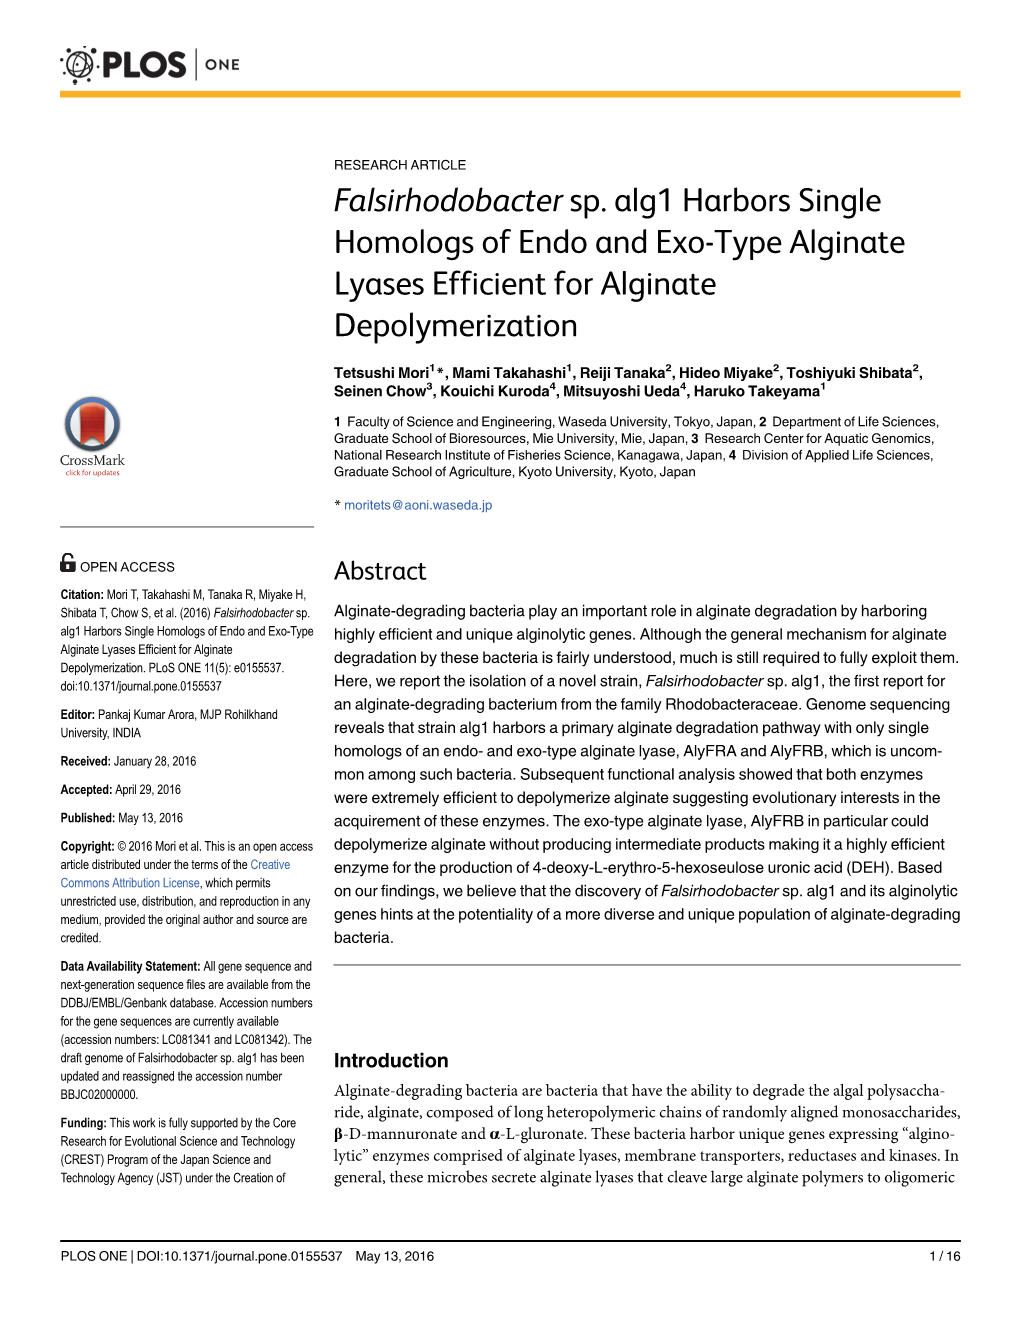 Falsirhodobacter Sp. Alg1 Harbors Single Homologs of Endo and Exo-Type Alginate Lyases Efficient for Alginate Depolymerization